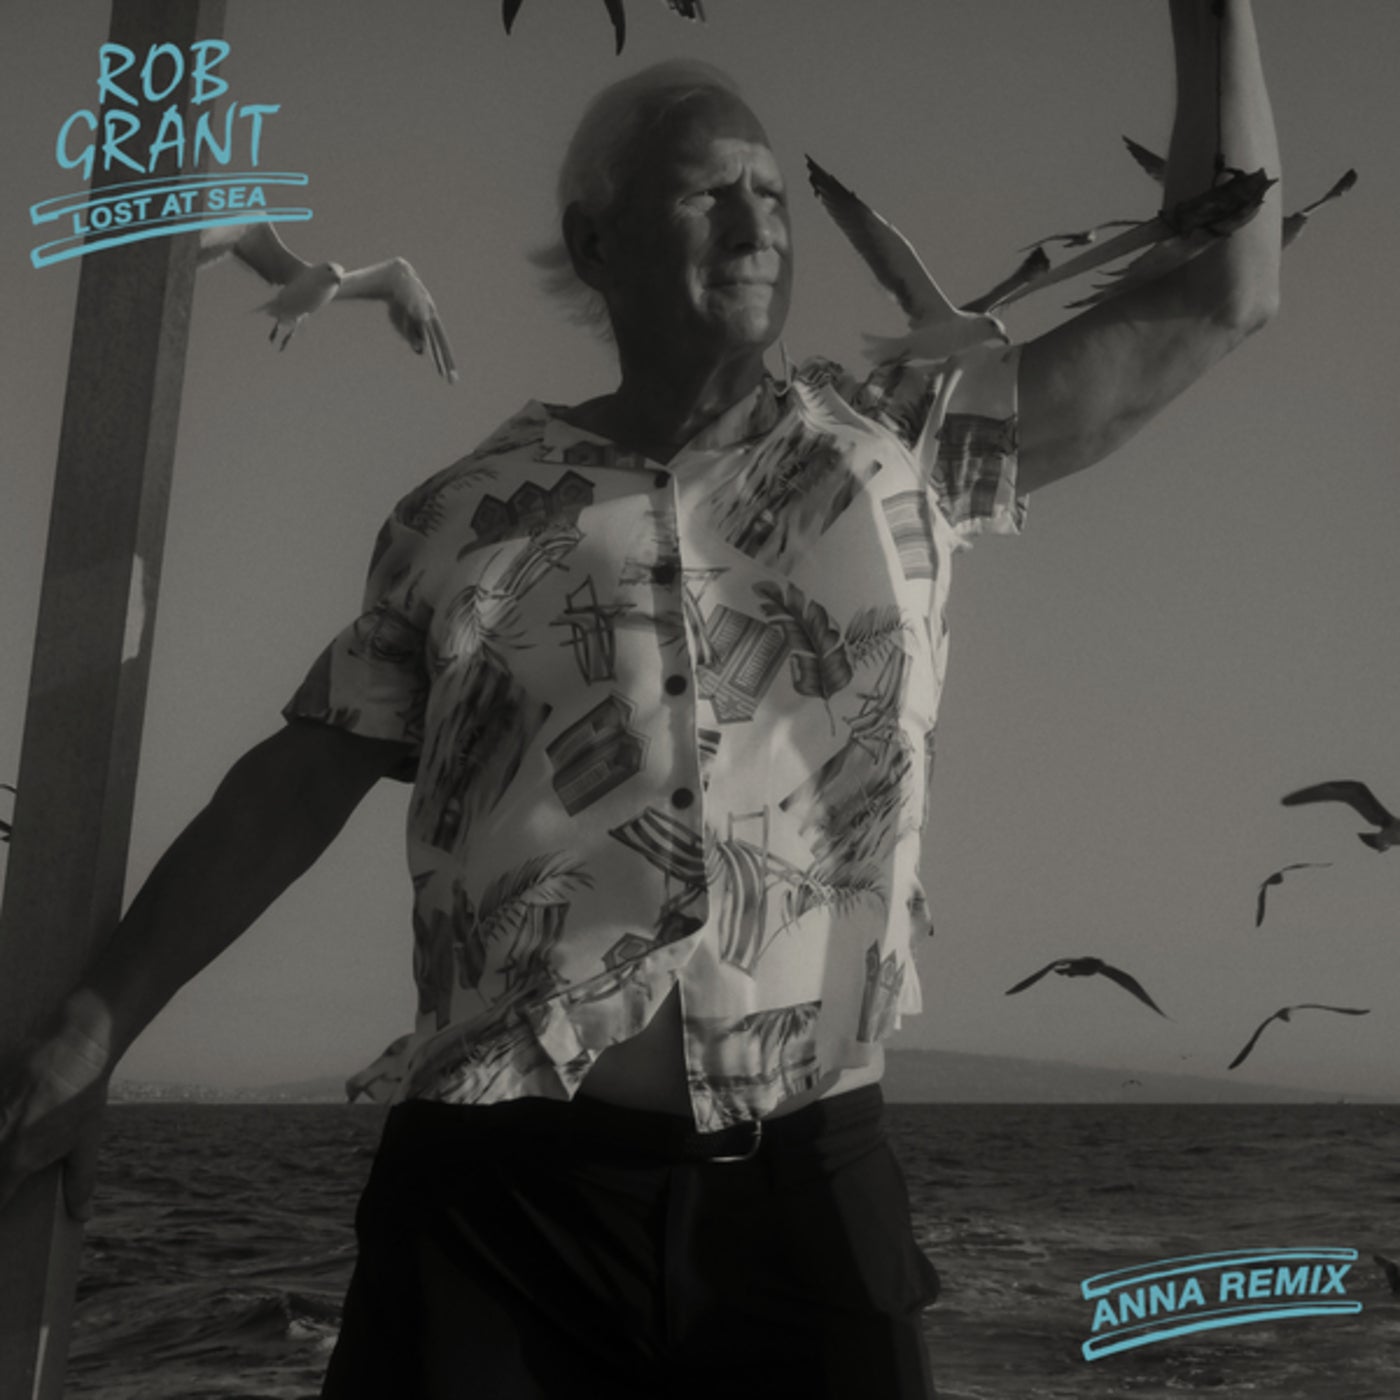 Rob Grant x Lana Del Rey - Lost At Sea (Anna Remix)